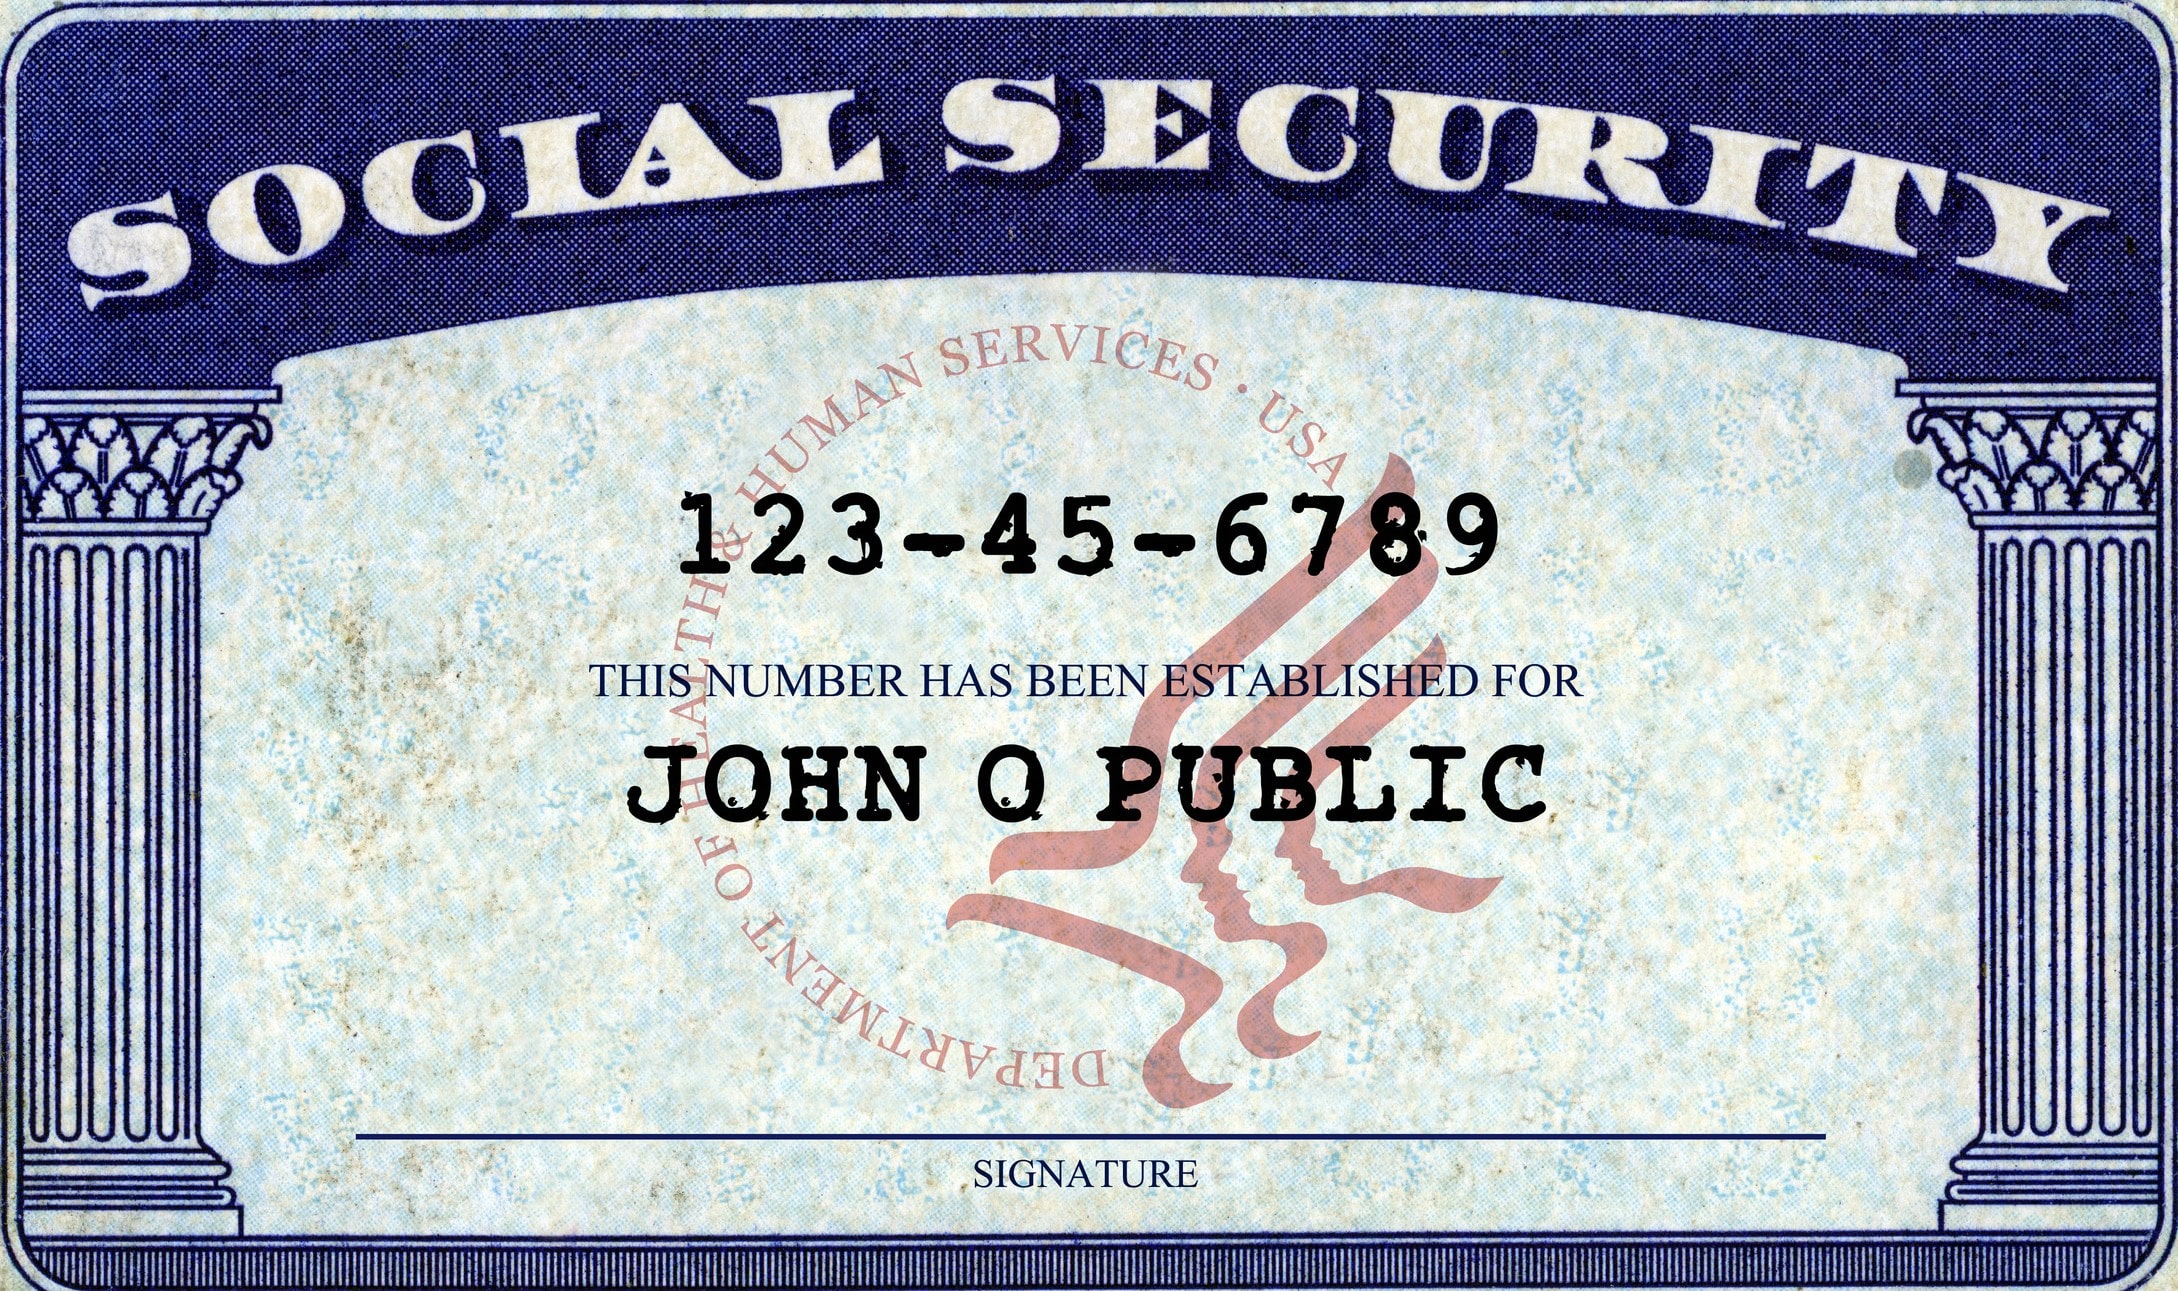 Social security card example.